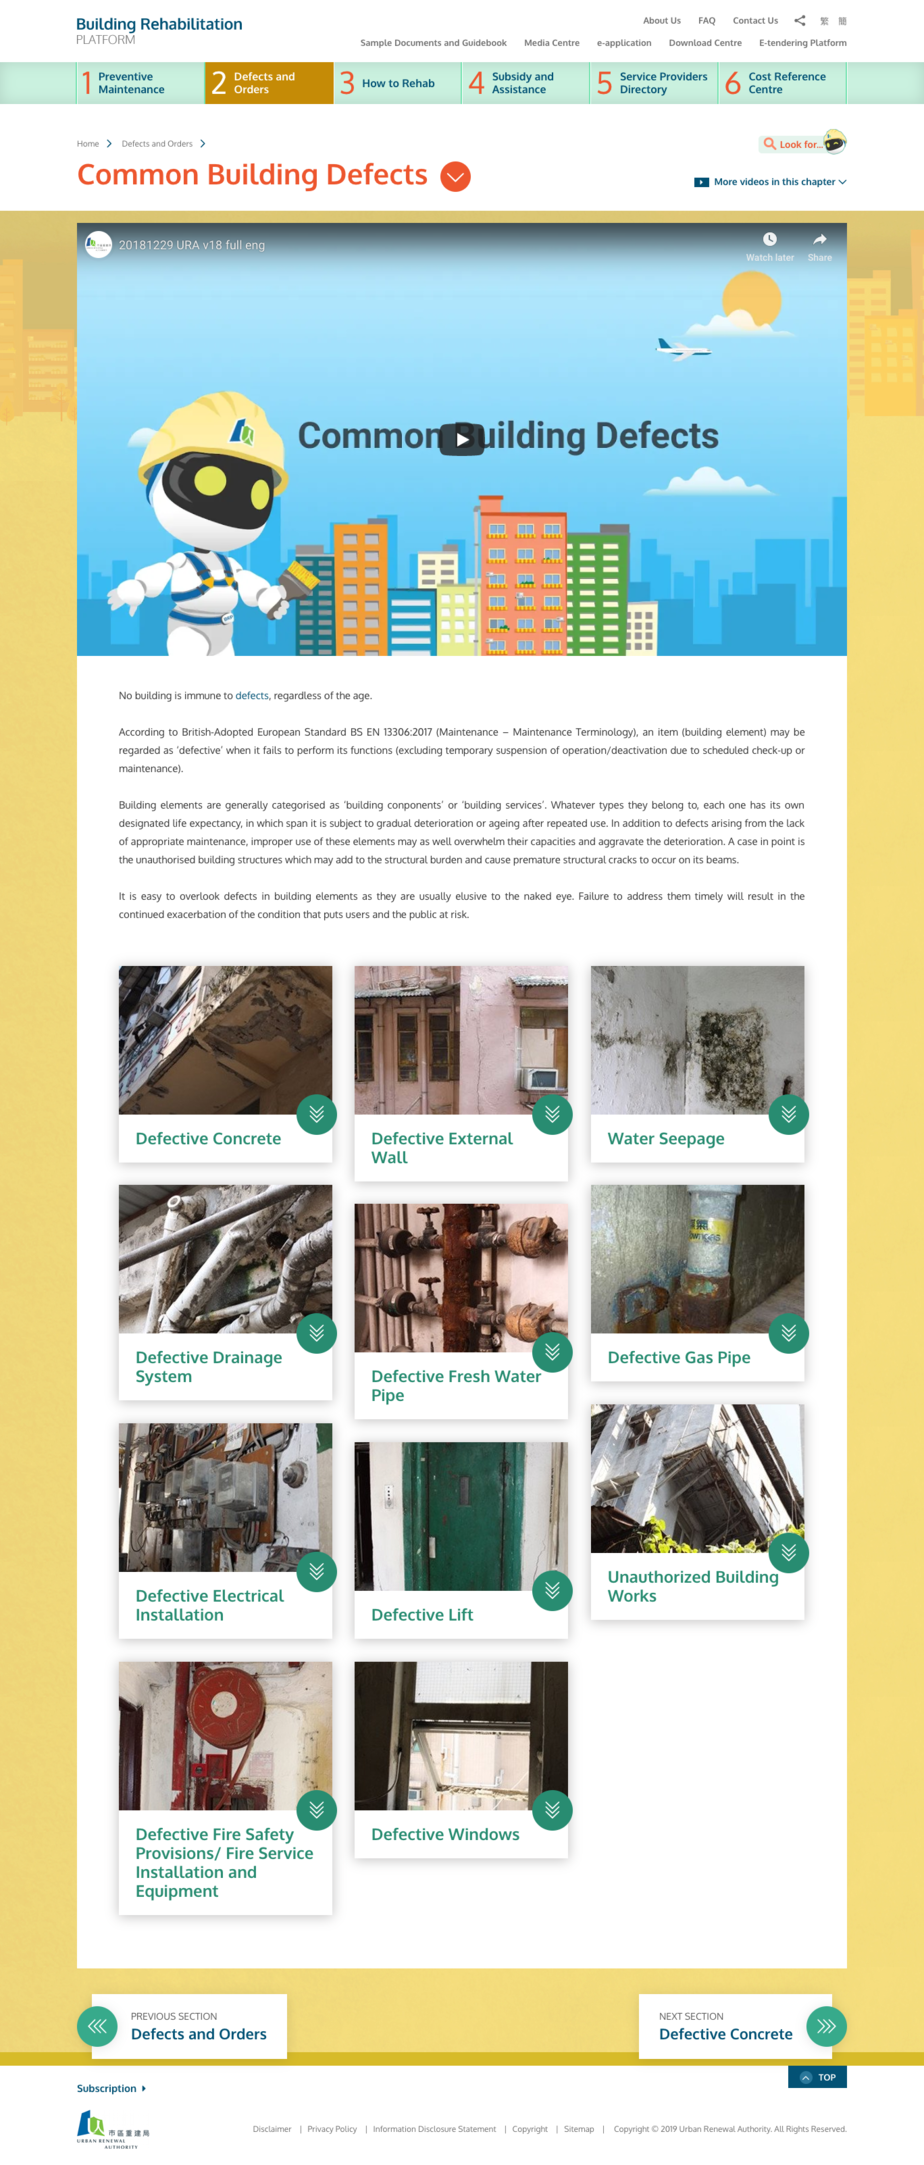 Urban Renewal Authority website screenshot for desktop version 3 of 5